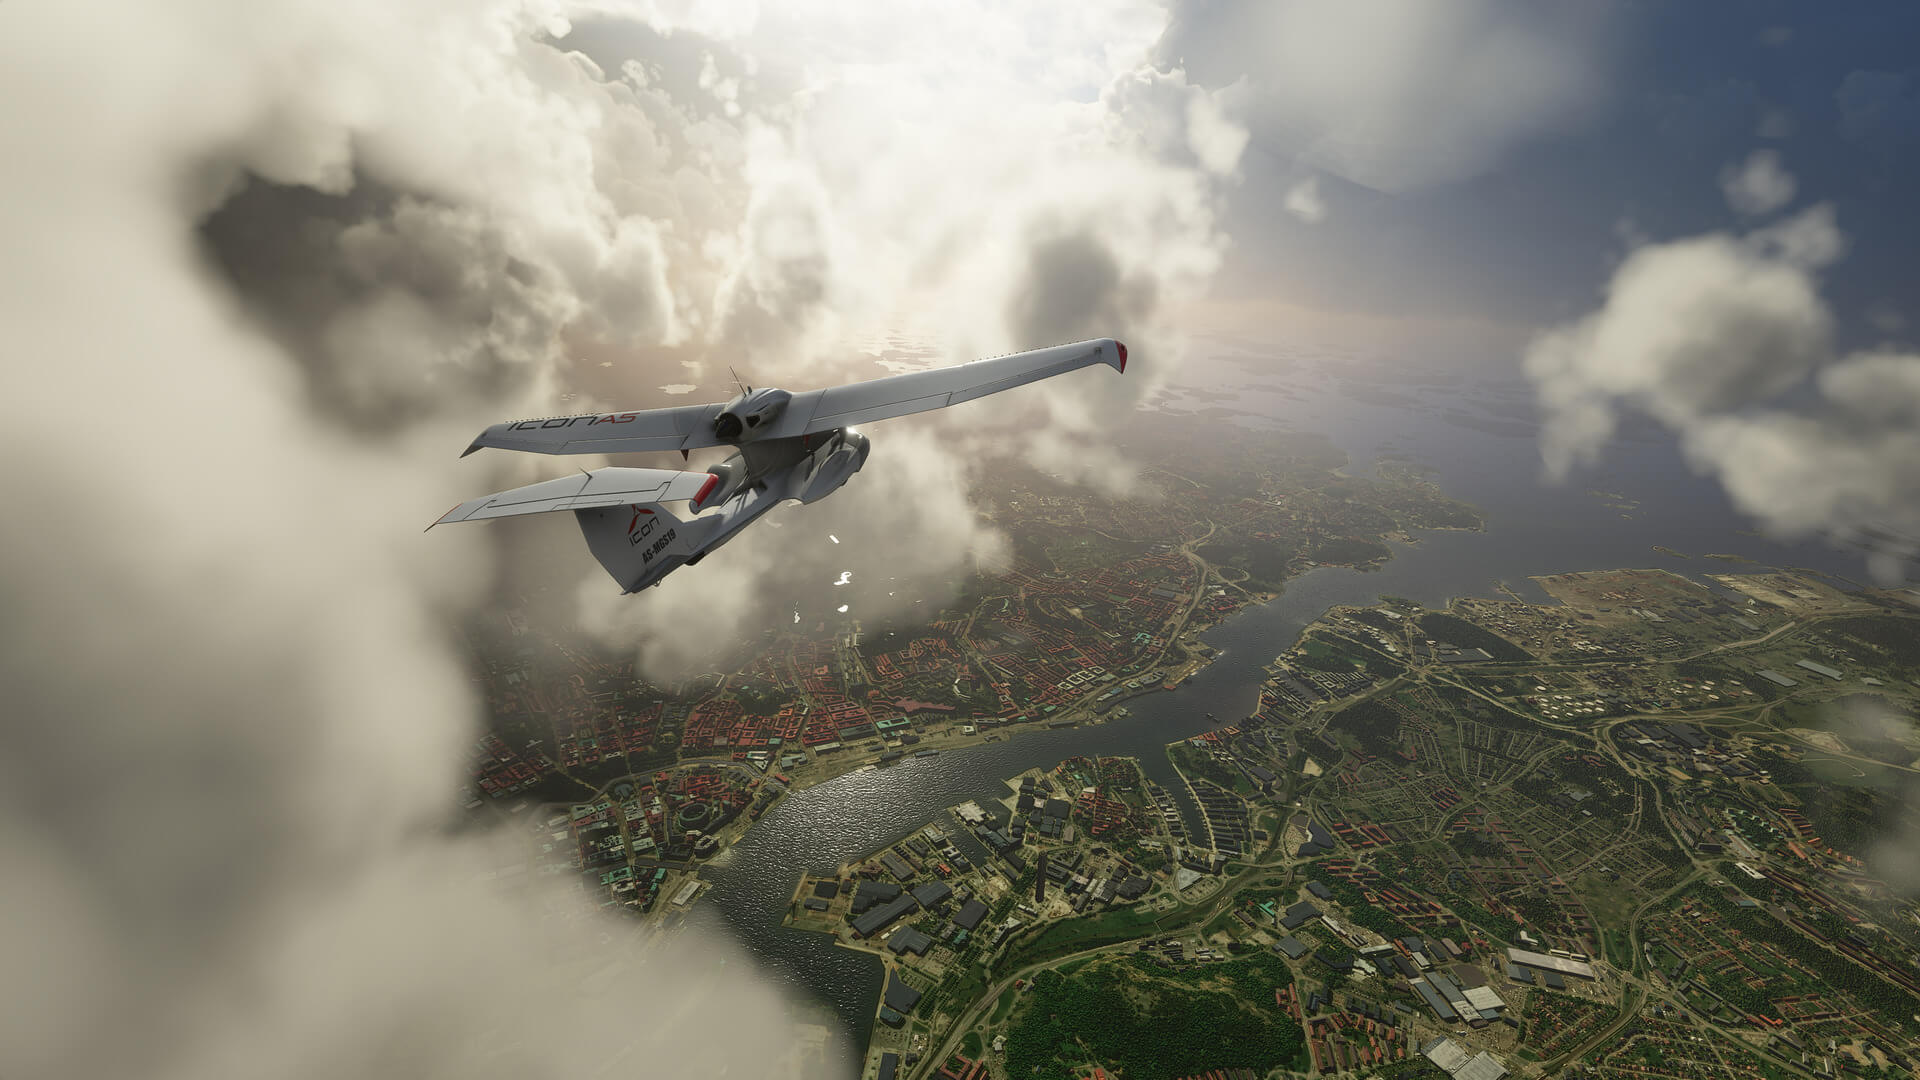 New breathtaking 4K screenshots released for Microsoft Flight Simulator